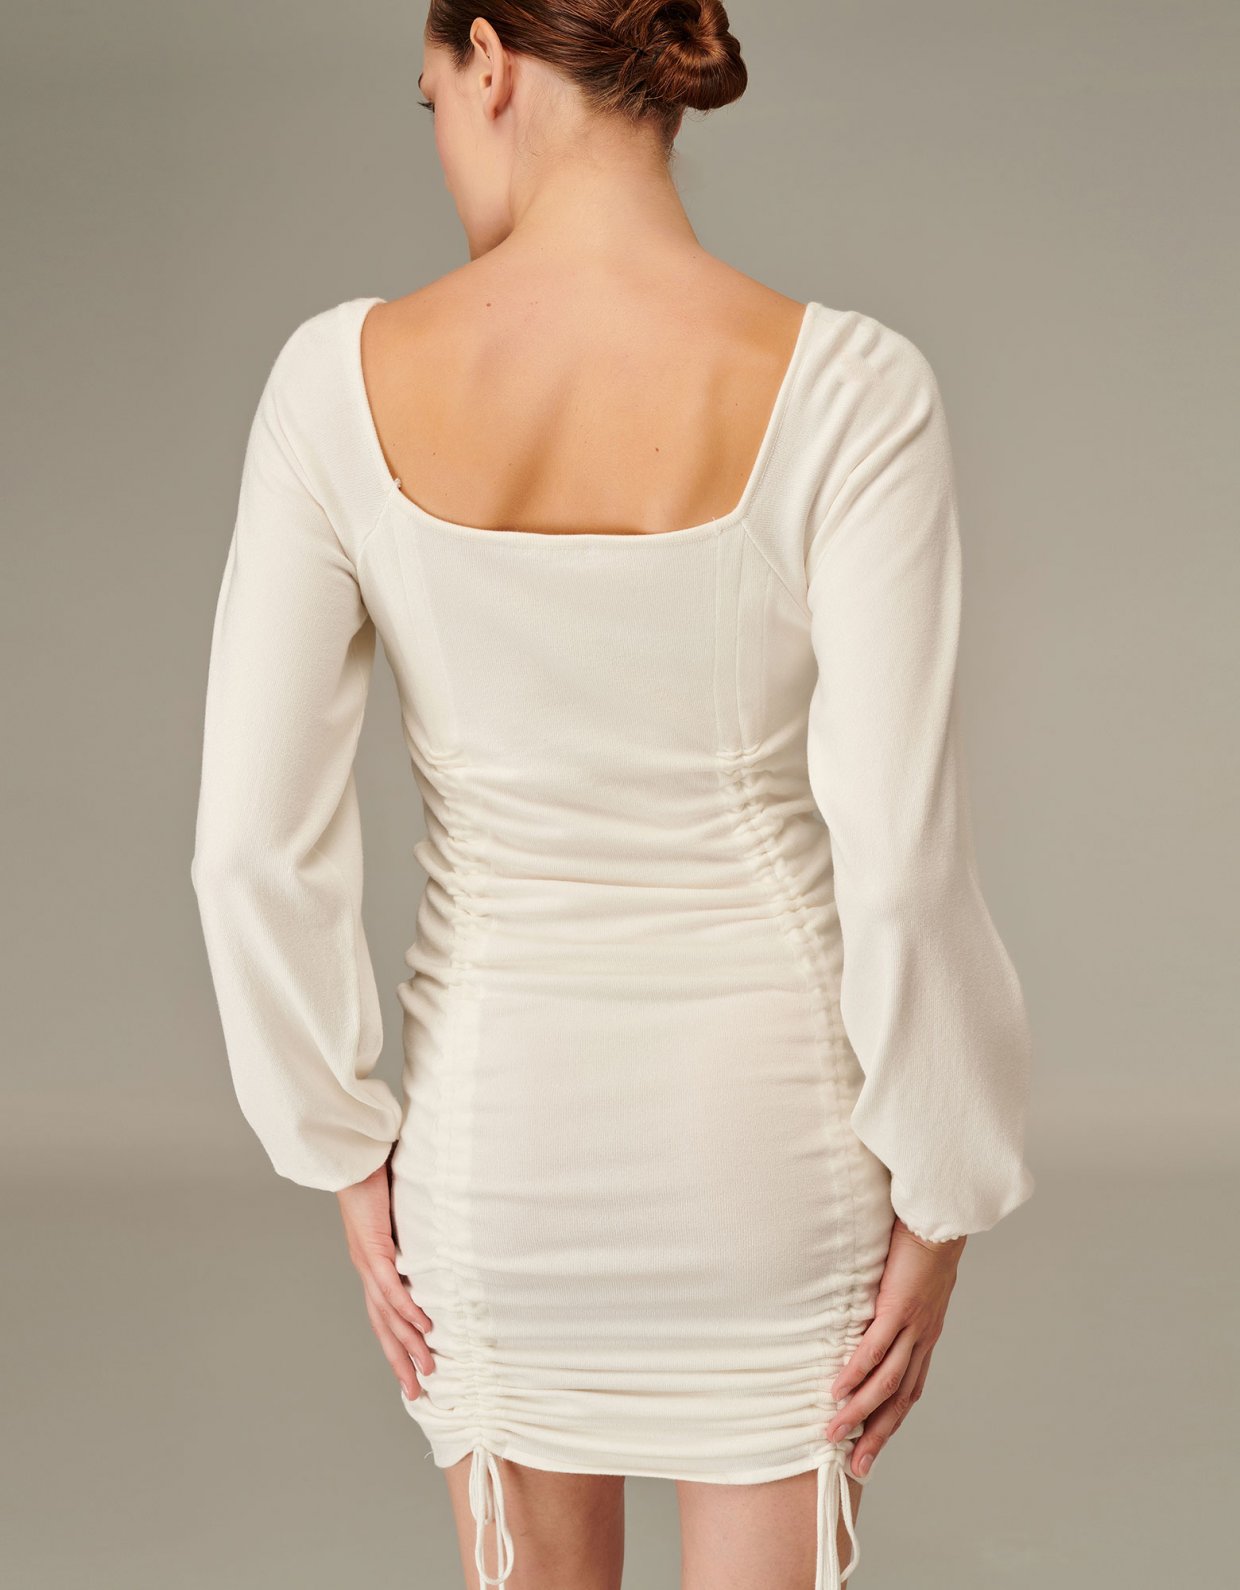 Combos Knitwear Combos W-115 White dress